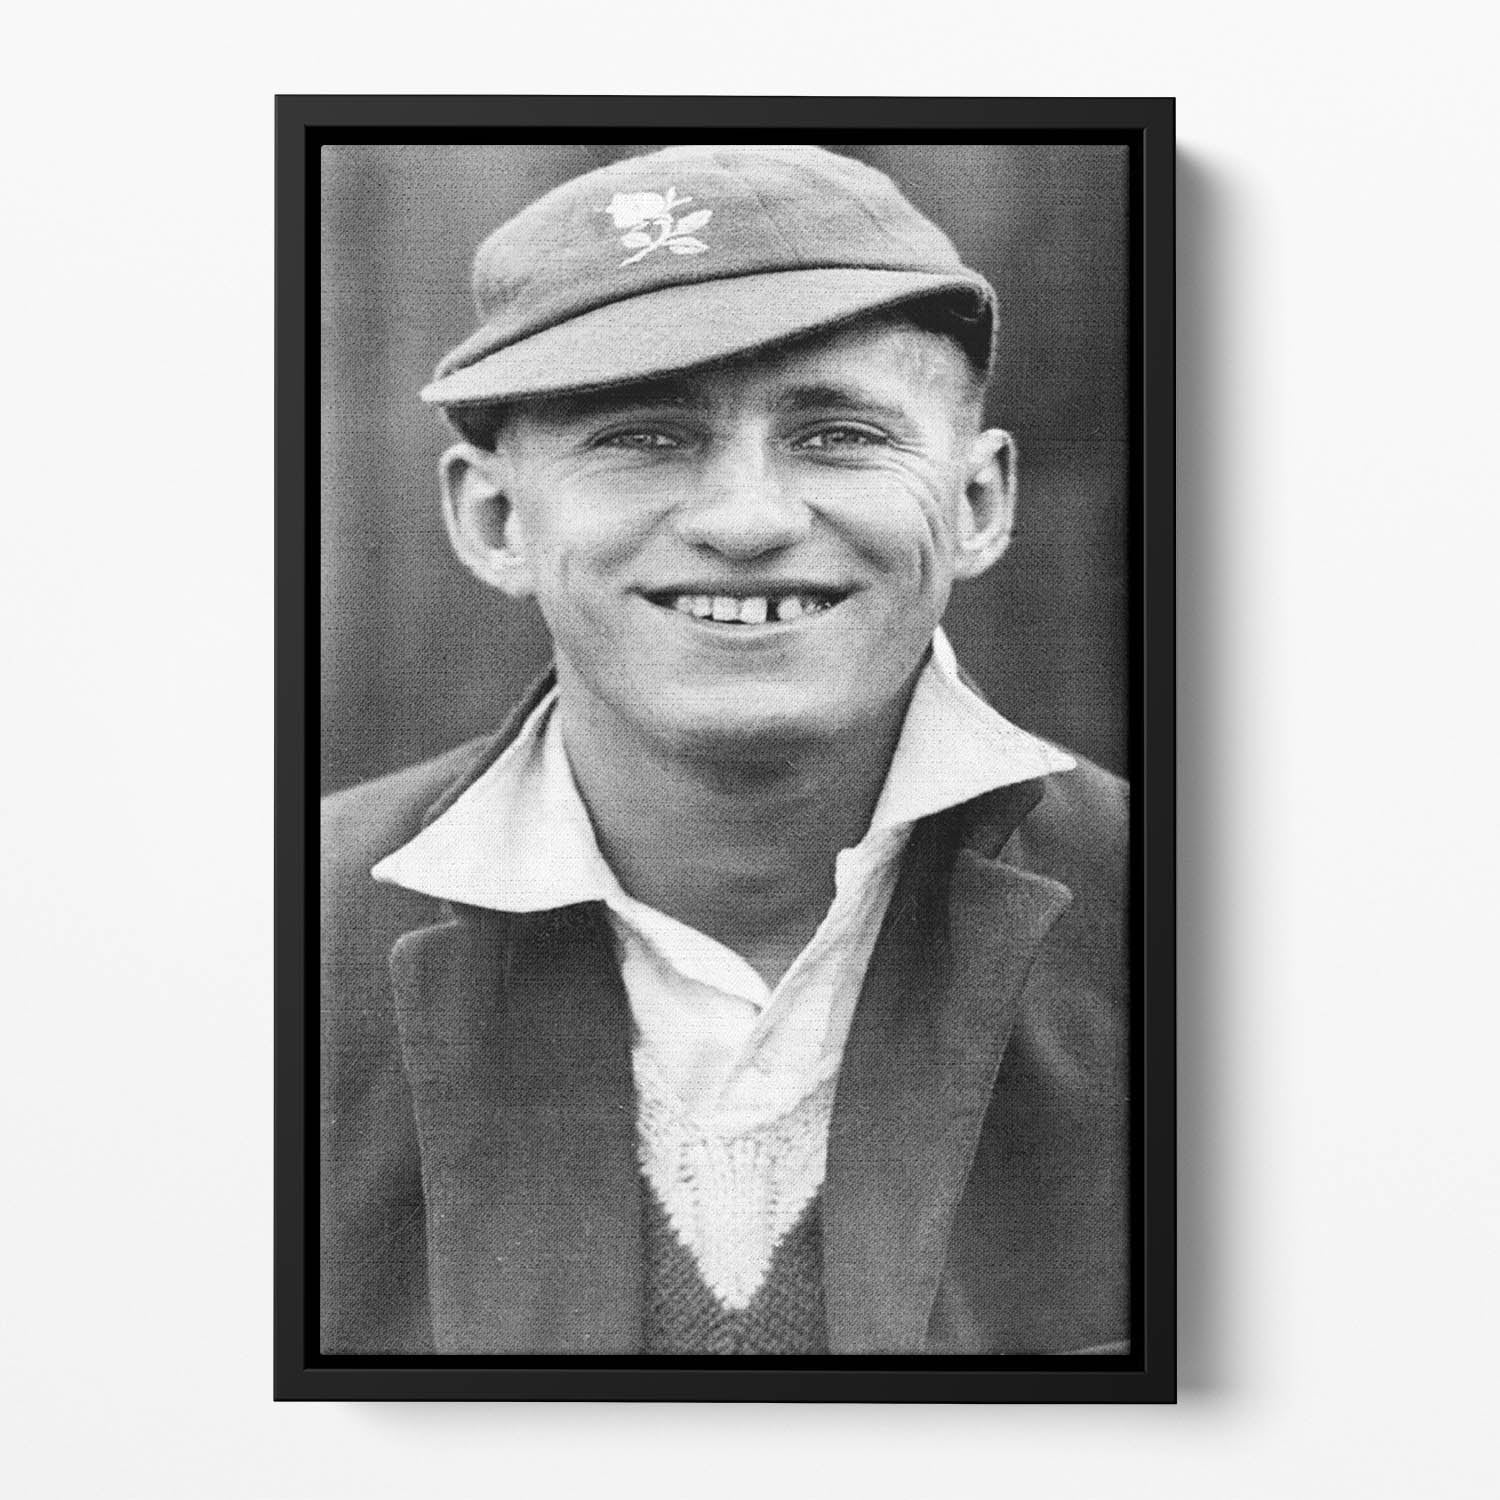 Len Hutton cricketer Floating Framed Canvas